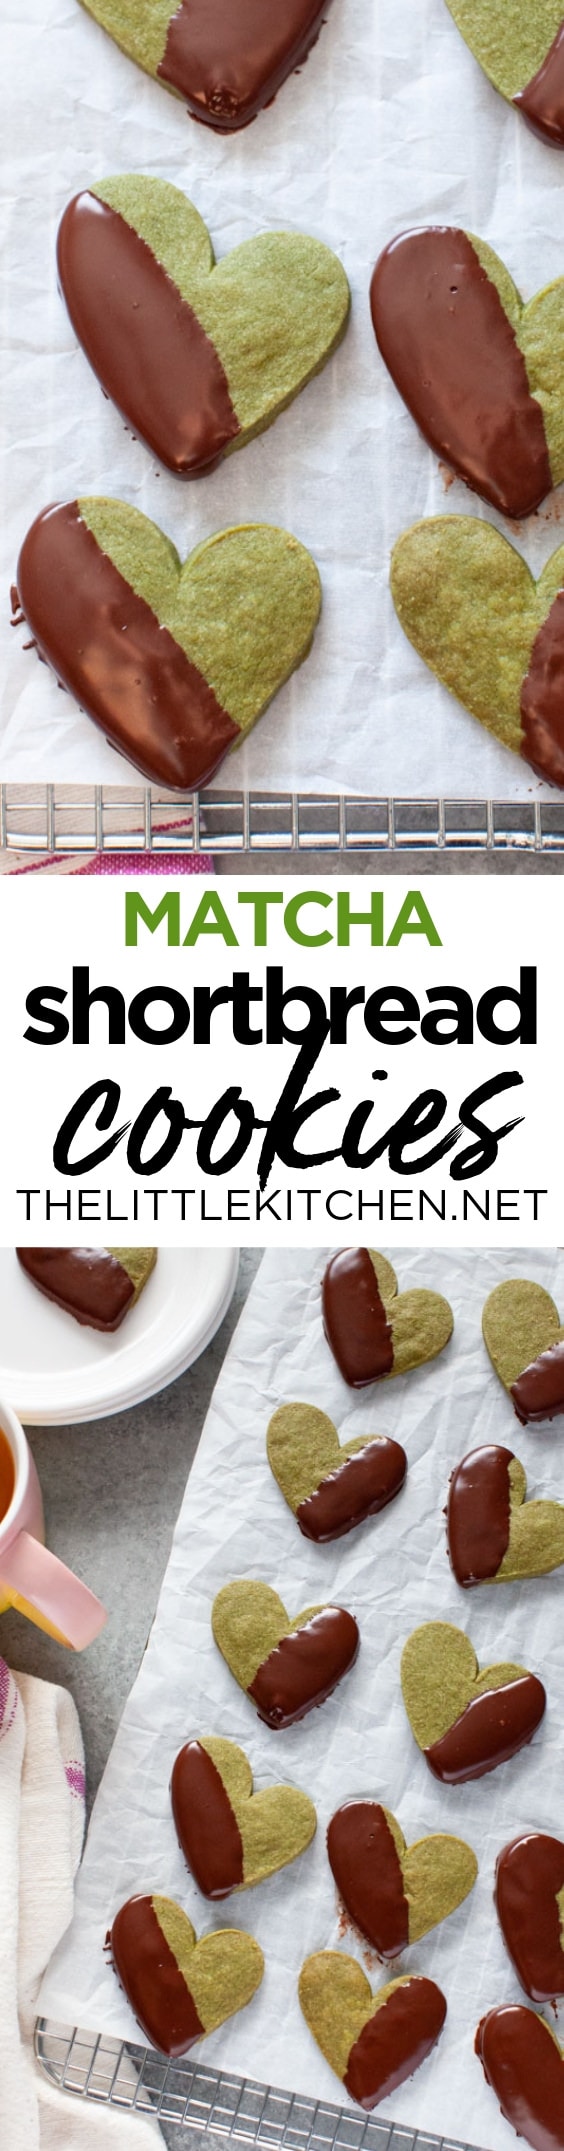 Matcha Cookies from thelittlekitchen.net